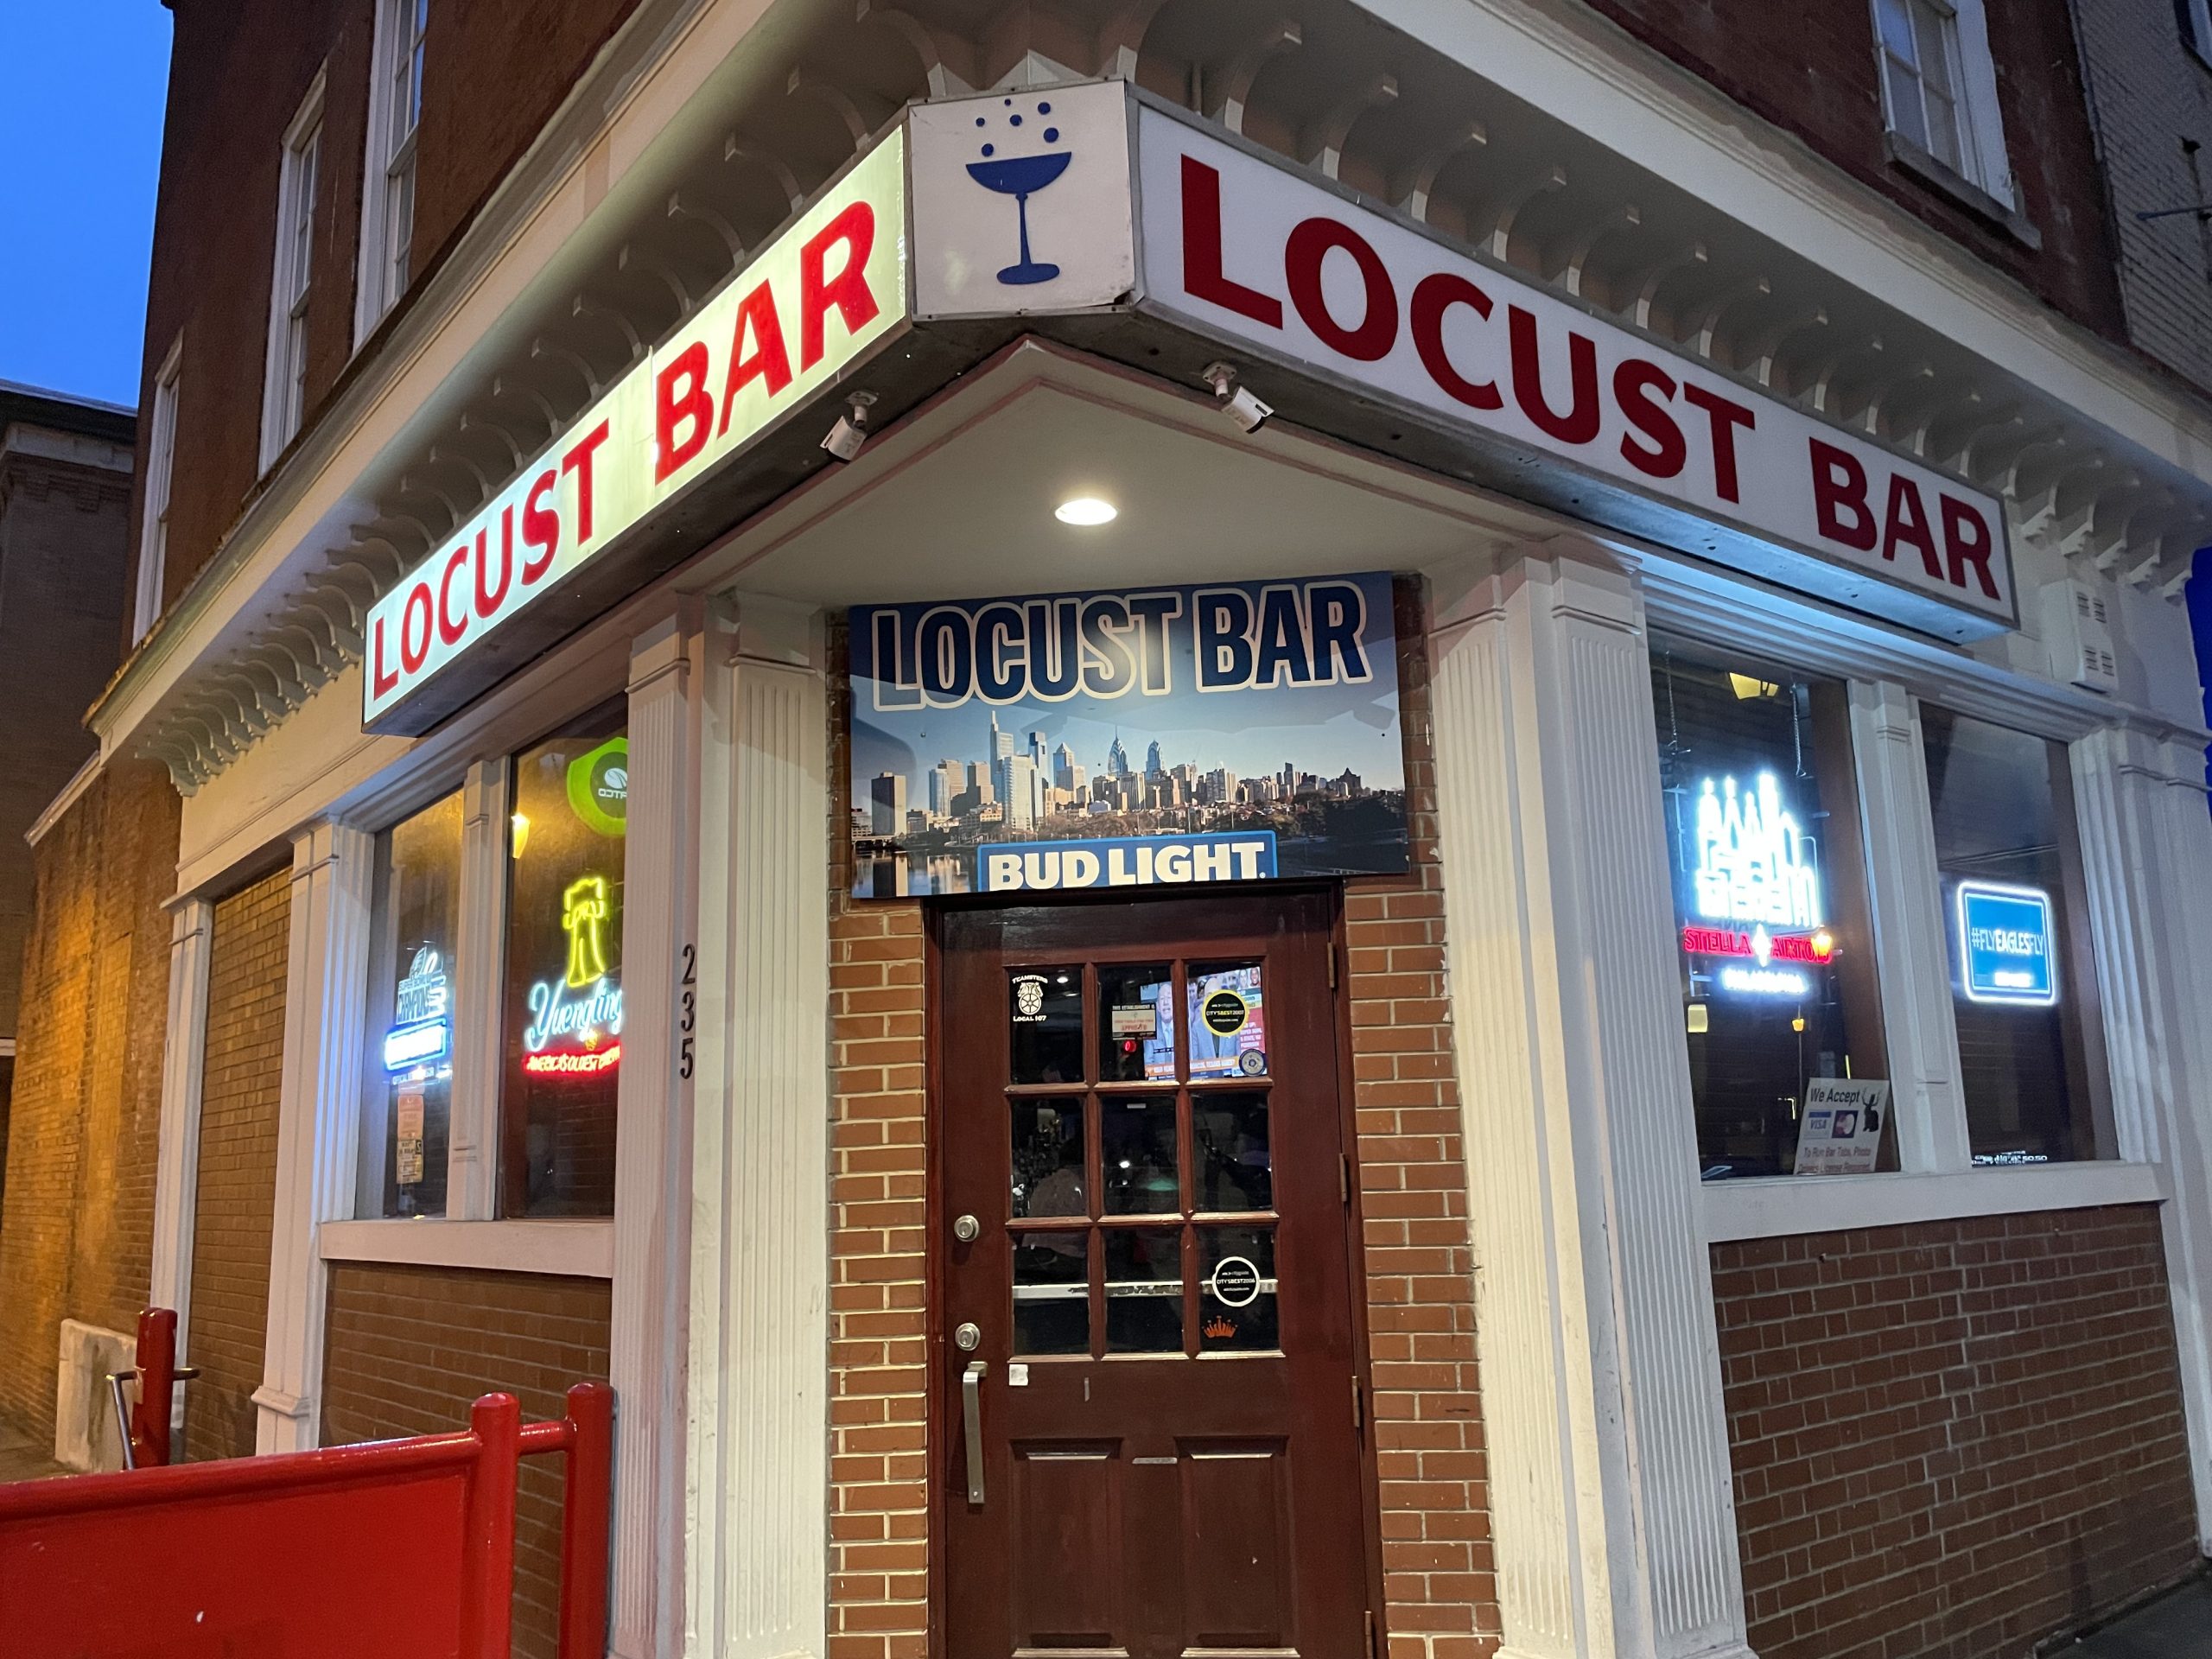 Locust Bar - Philadelphia Dive Bar - Exterior Sign